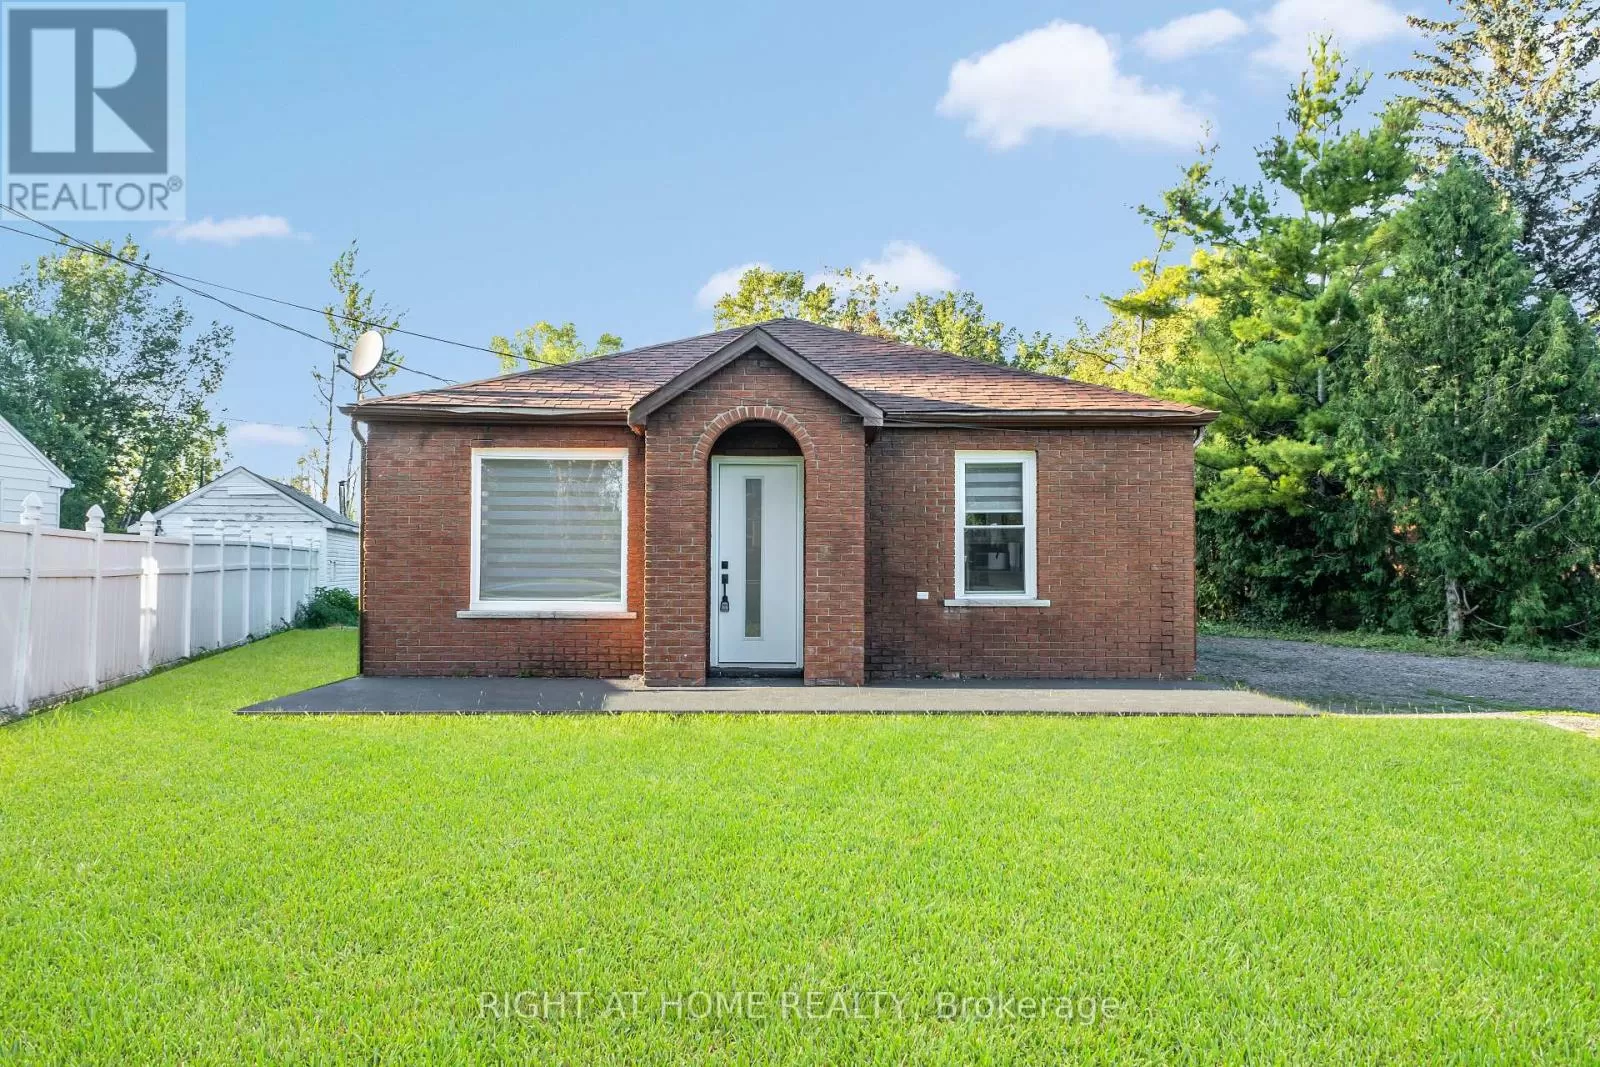 House for rent: 364 Bridge St W, Belleville, Ontario K8N 4Z2